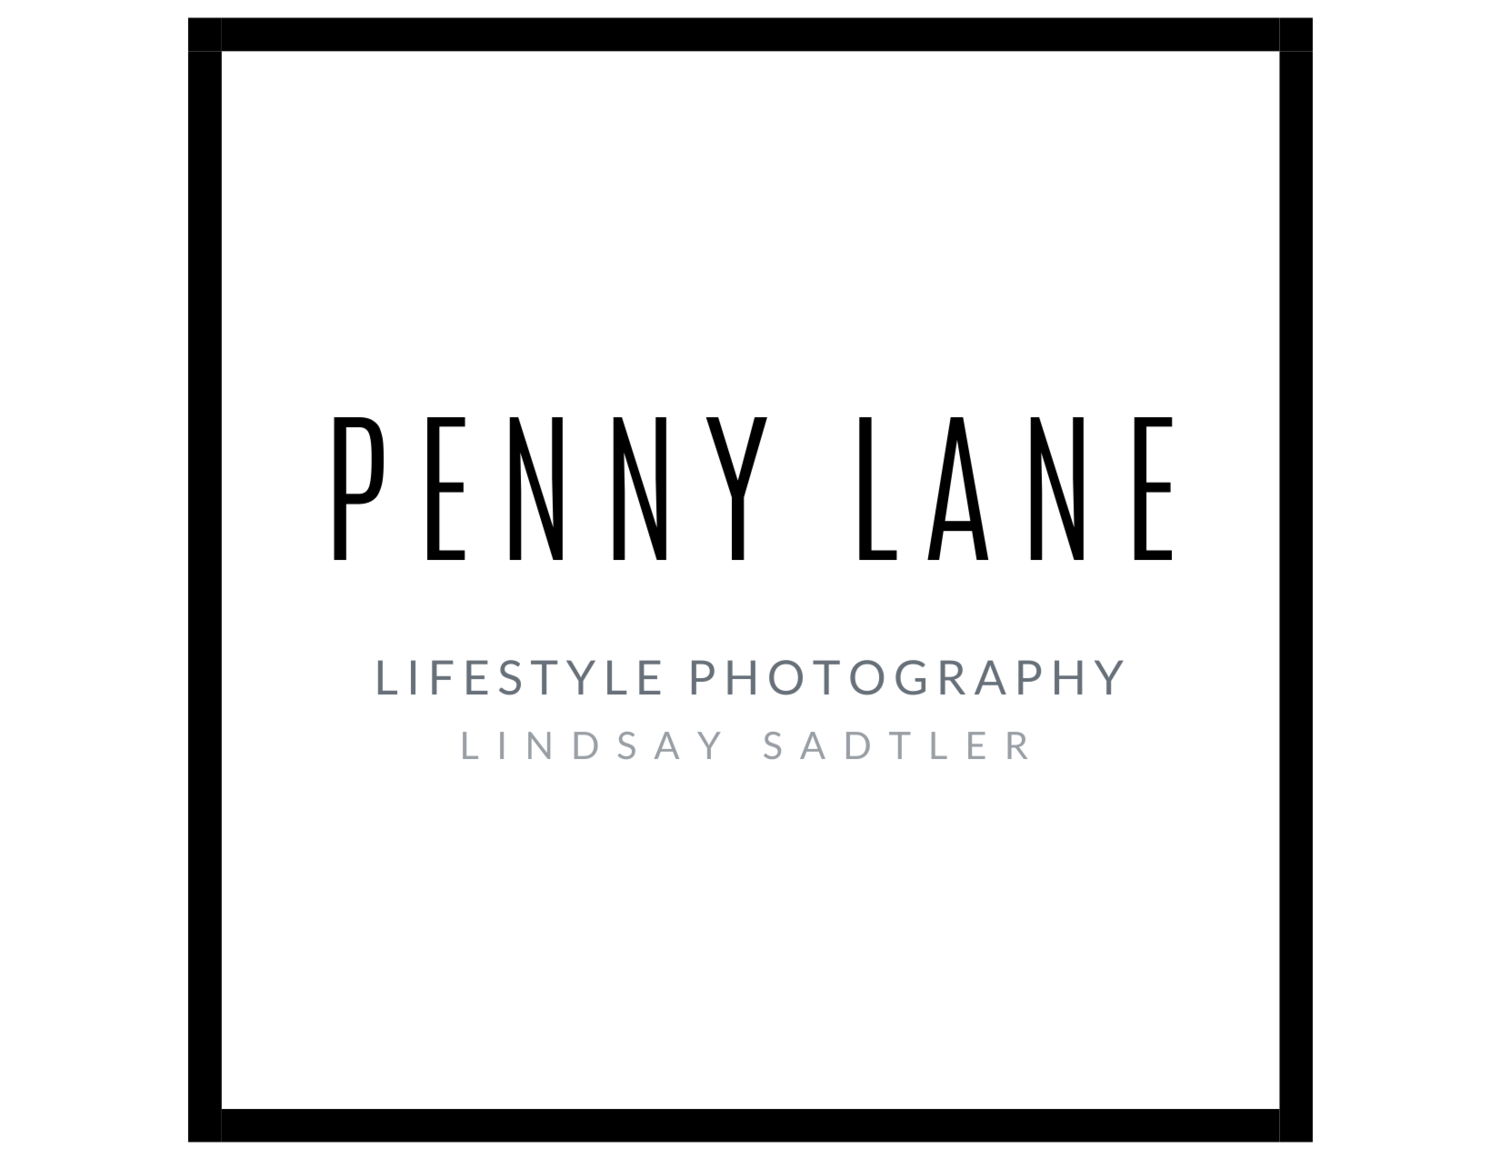 Penny Lane Lifestyle Photography